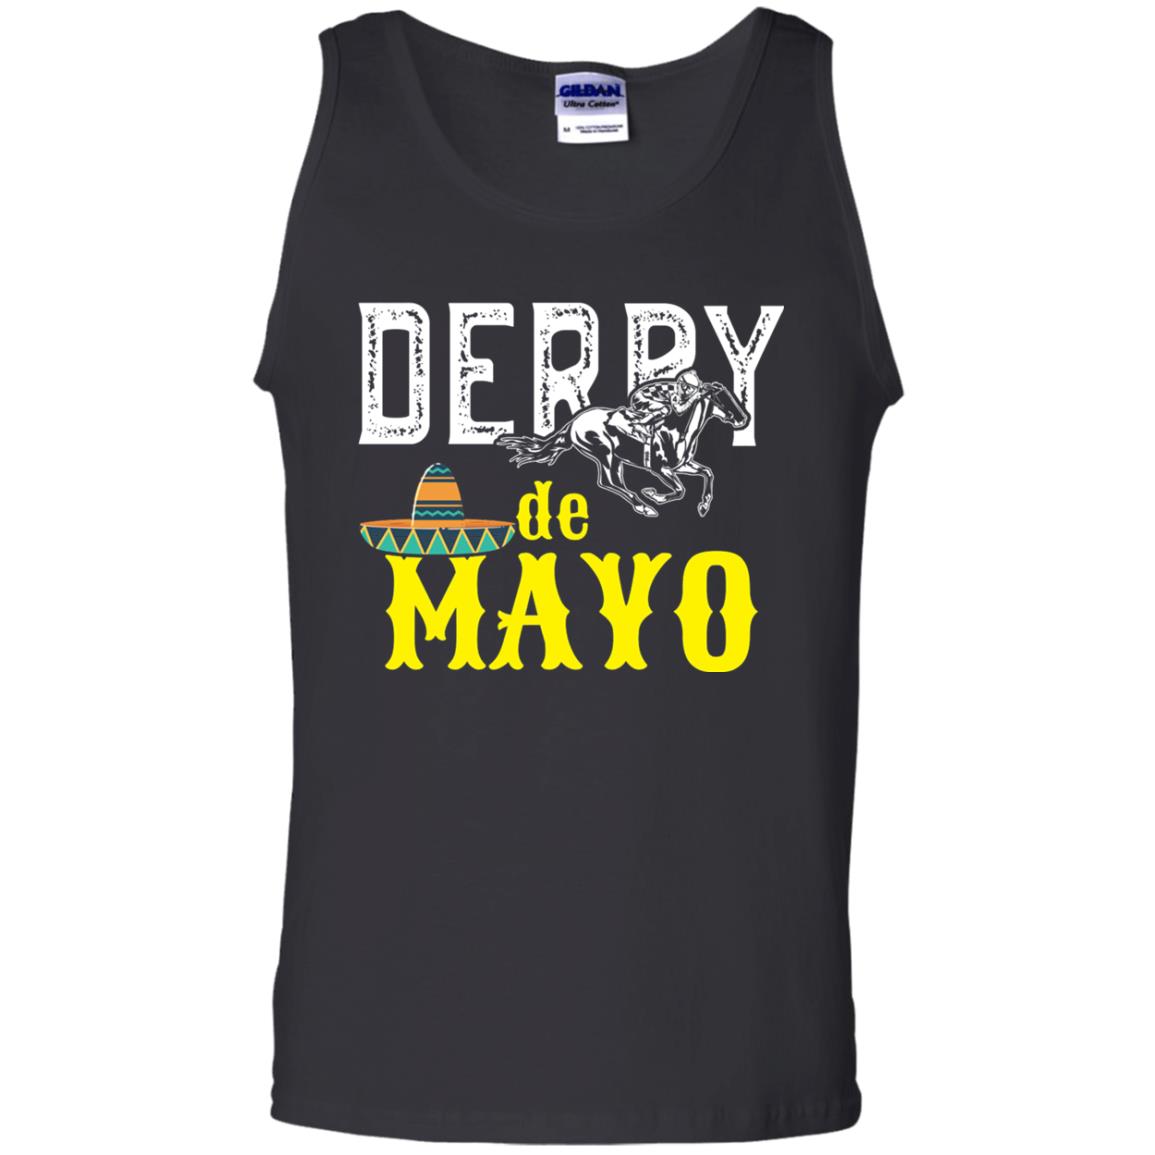 Cinco Derby De Mayo Horse Race Shirt